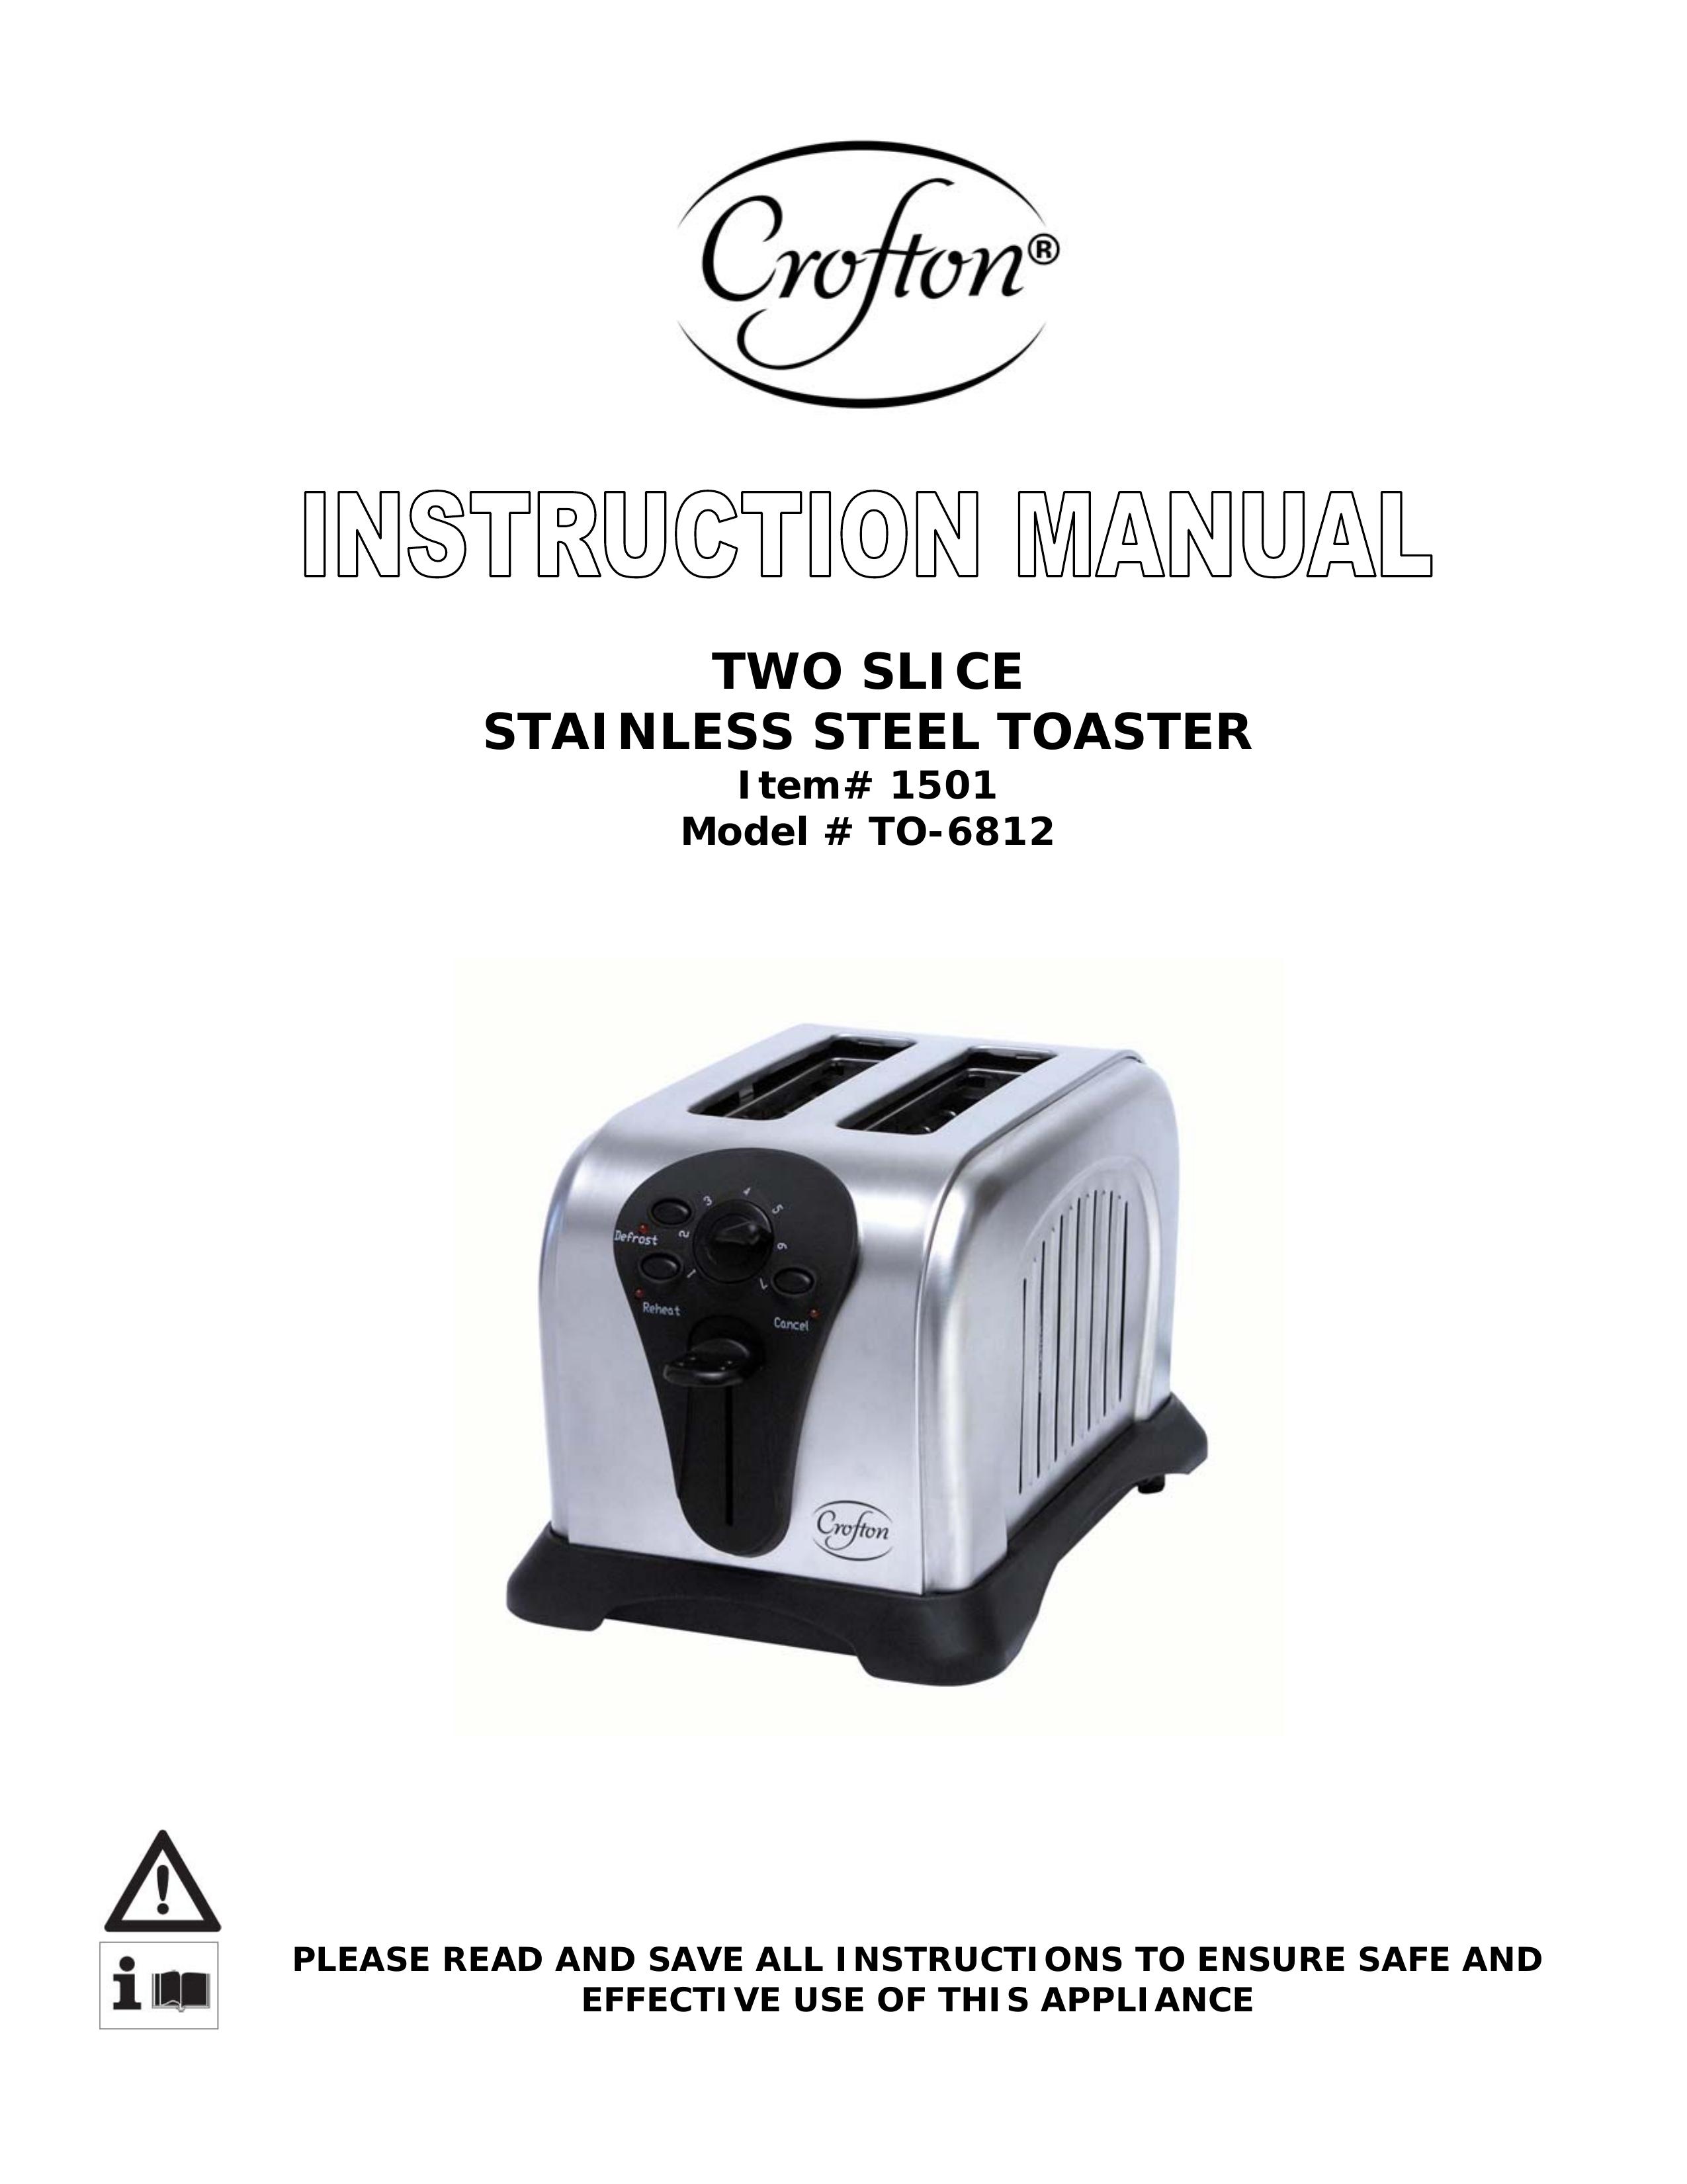 Wachsmuth & Krogmann TO-6812 Toaster User Manual